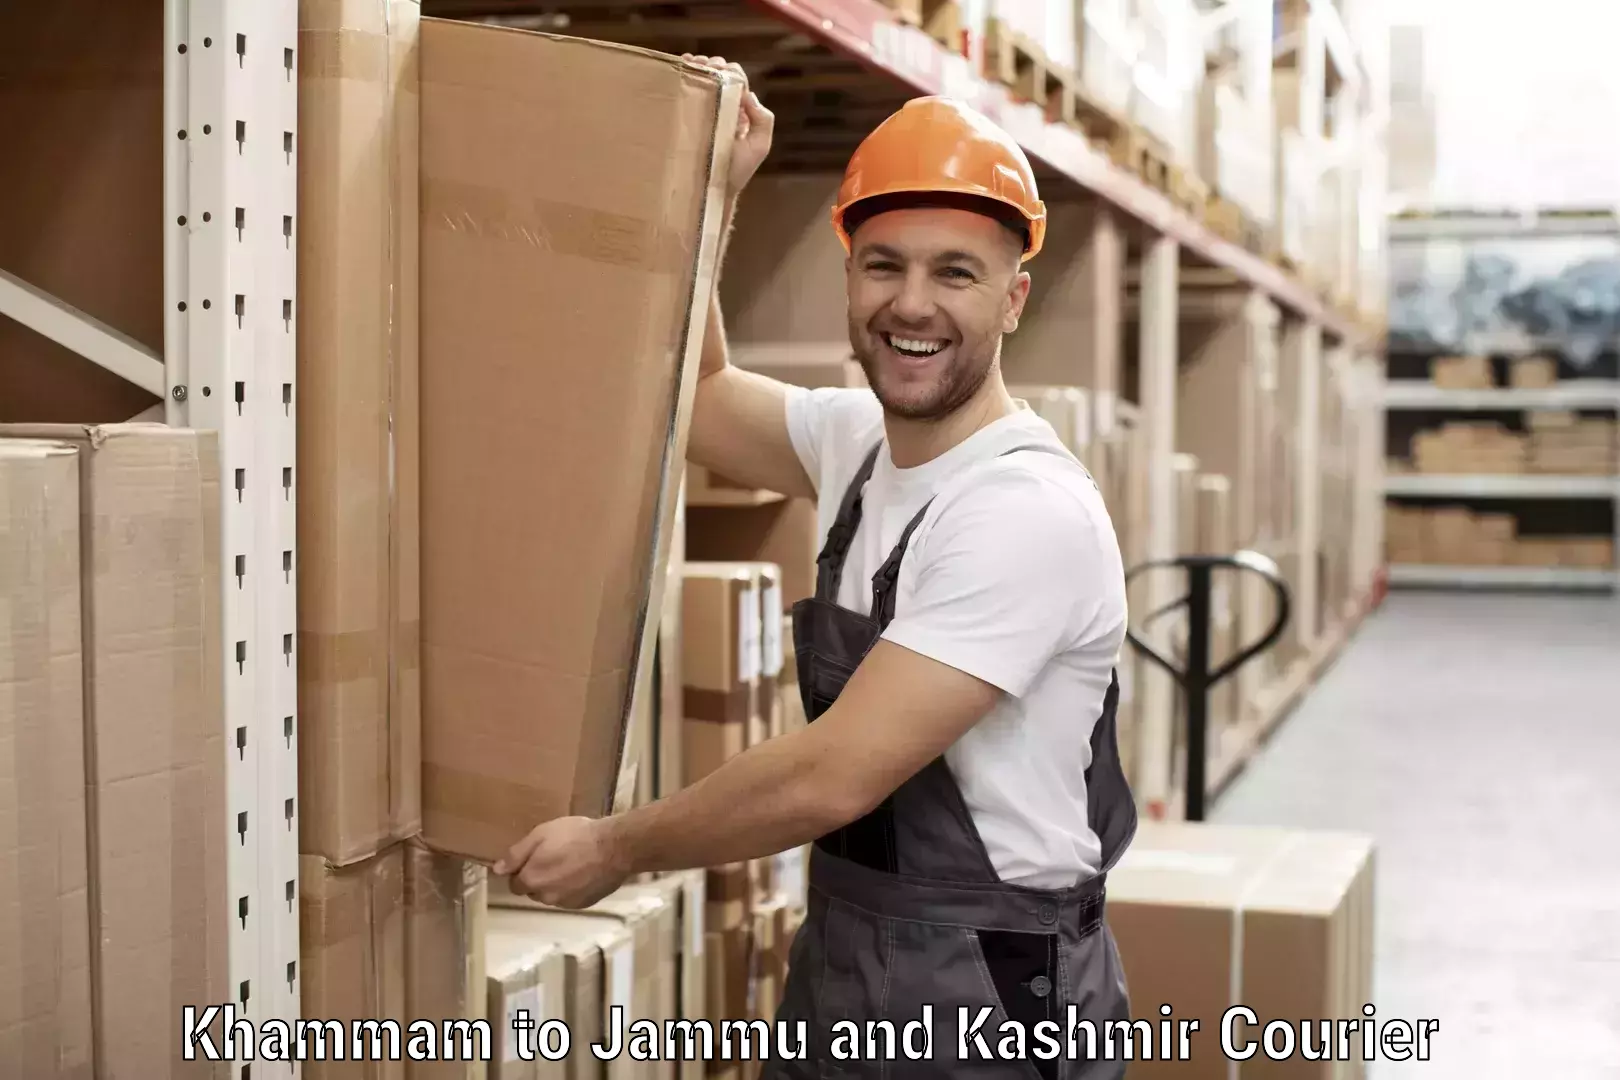 Nationwide delivery network Khammam to Jammu